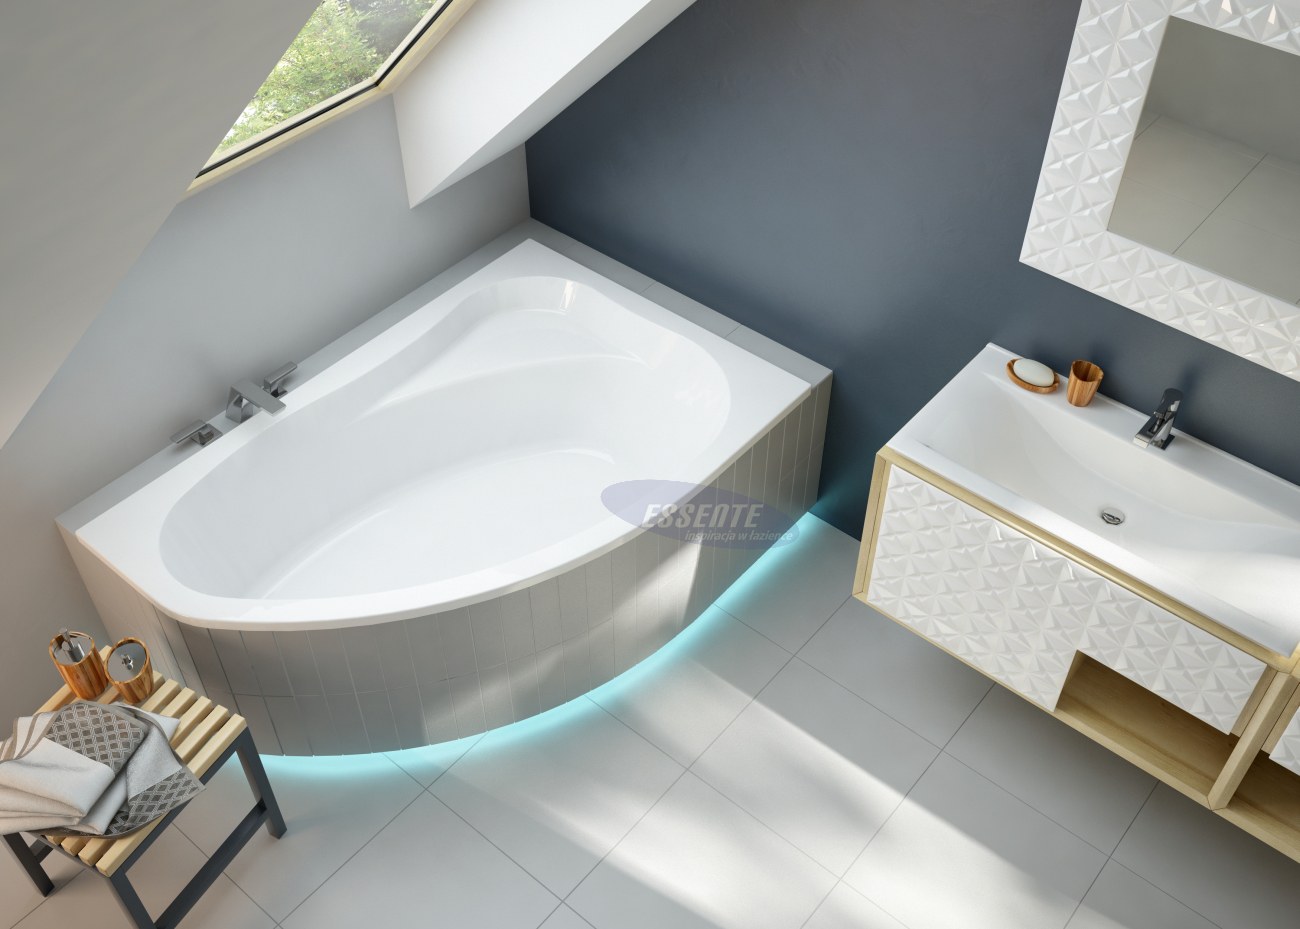 Newest cornered bathtub IMPALA in size 150x85 cm, check ExclusiveLine series from ESSENTE